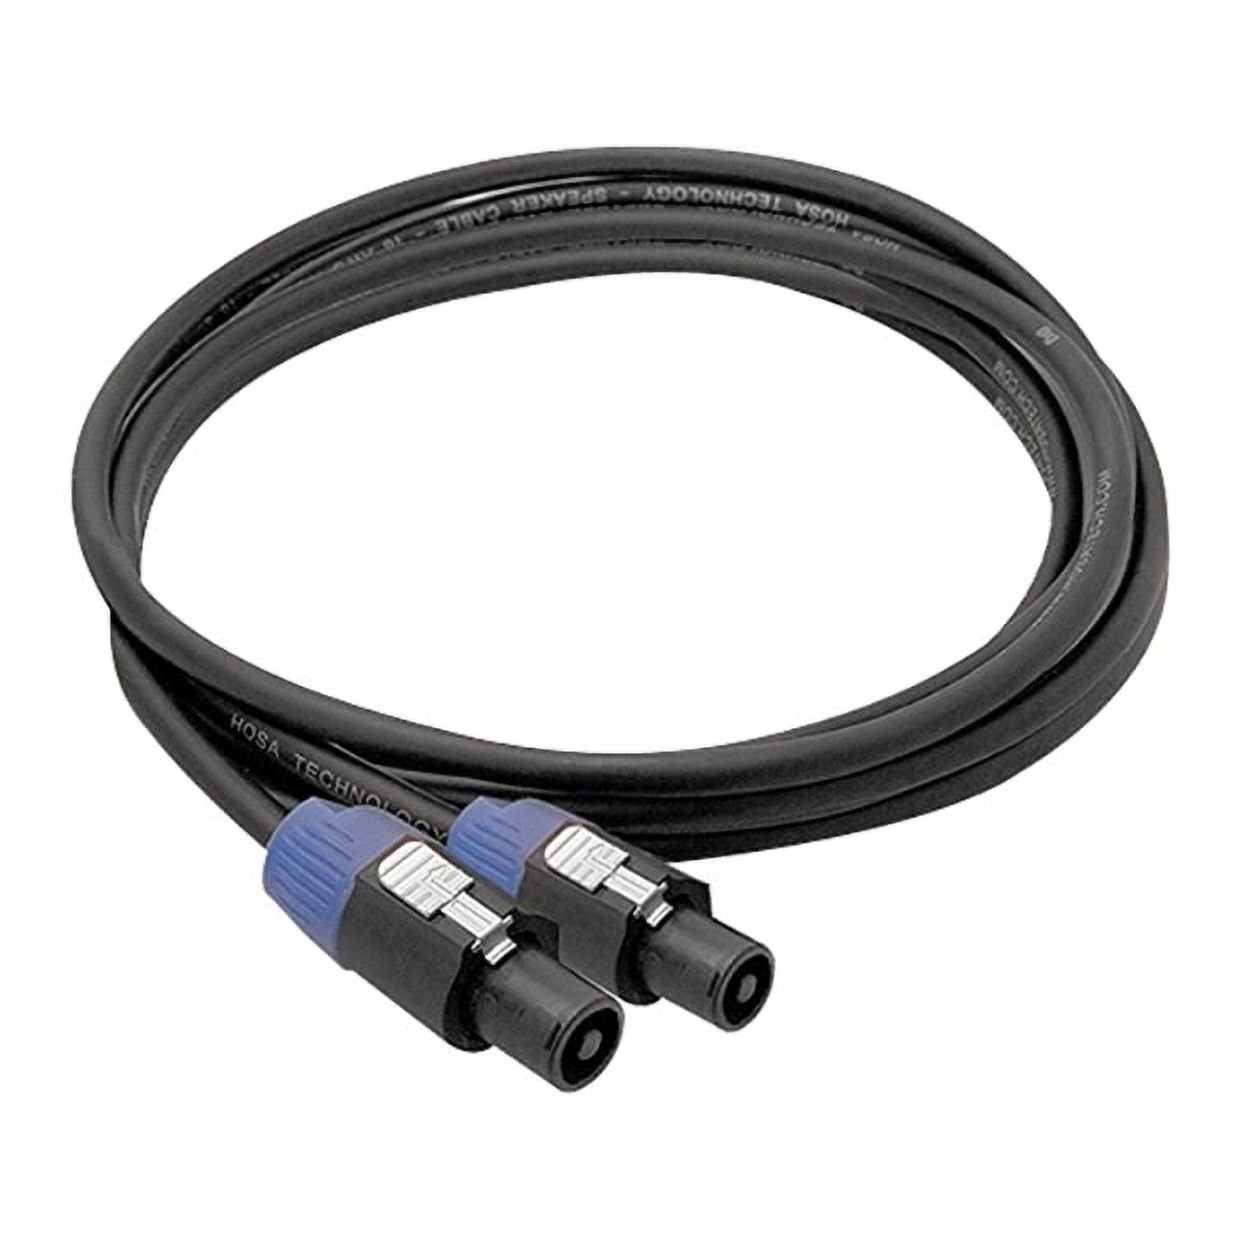 05' Hosa Speaker Cable 14 Gauge Rean Connectors - image 2 of 2